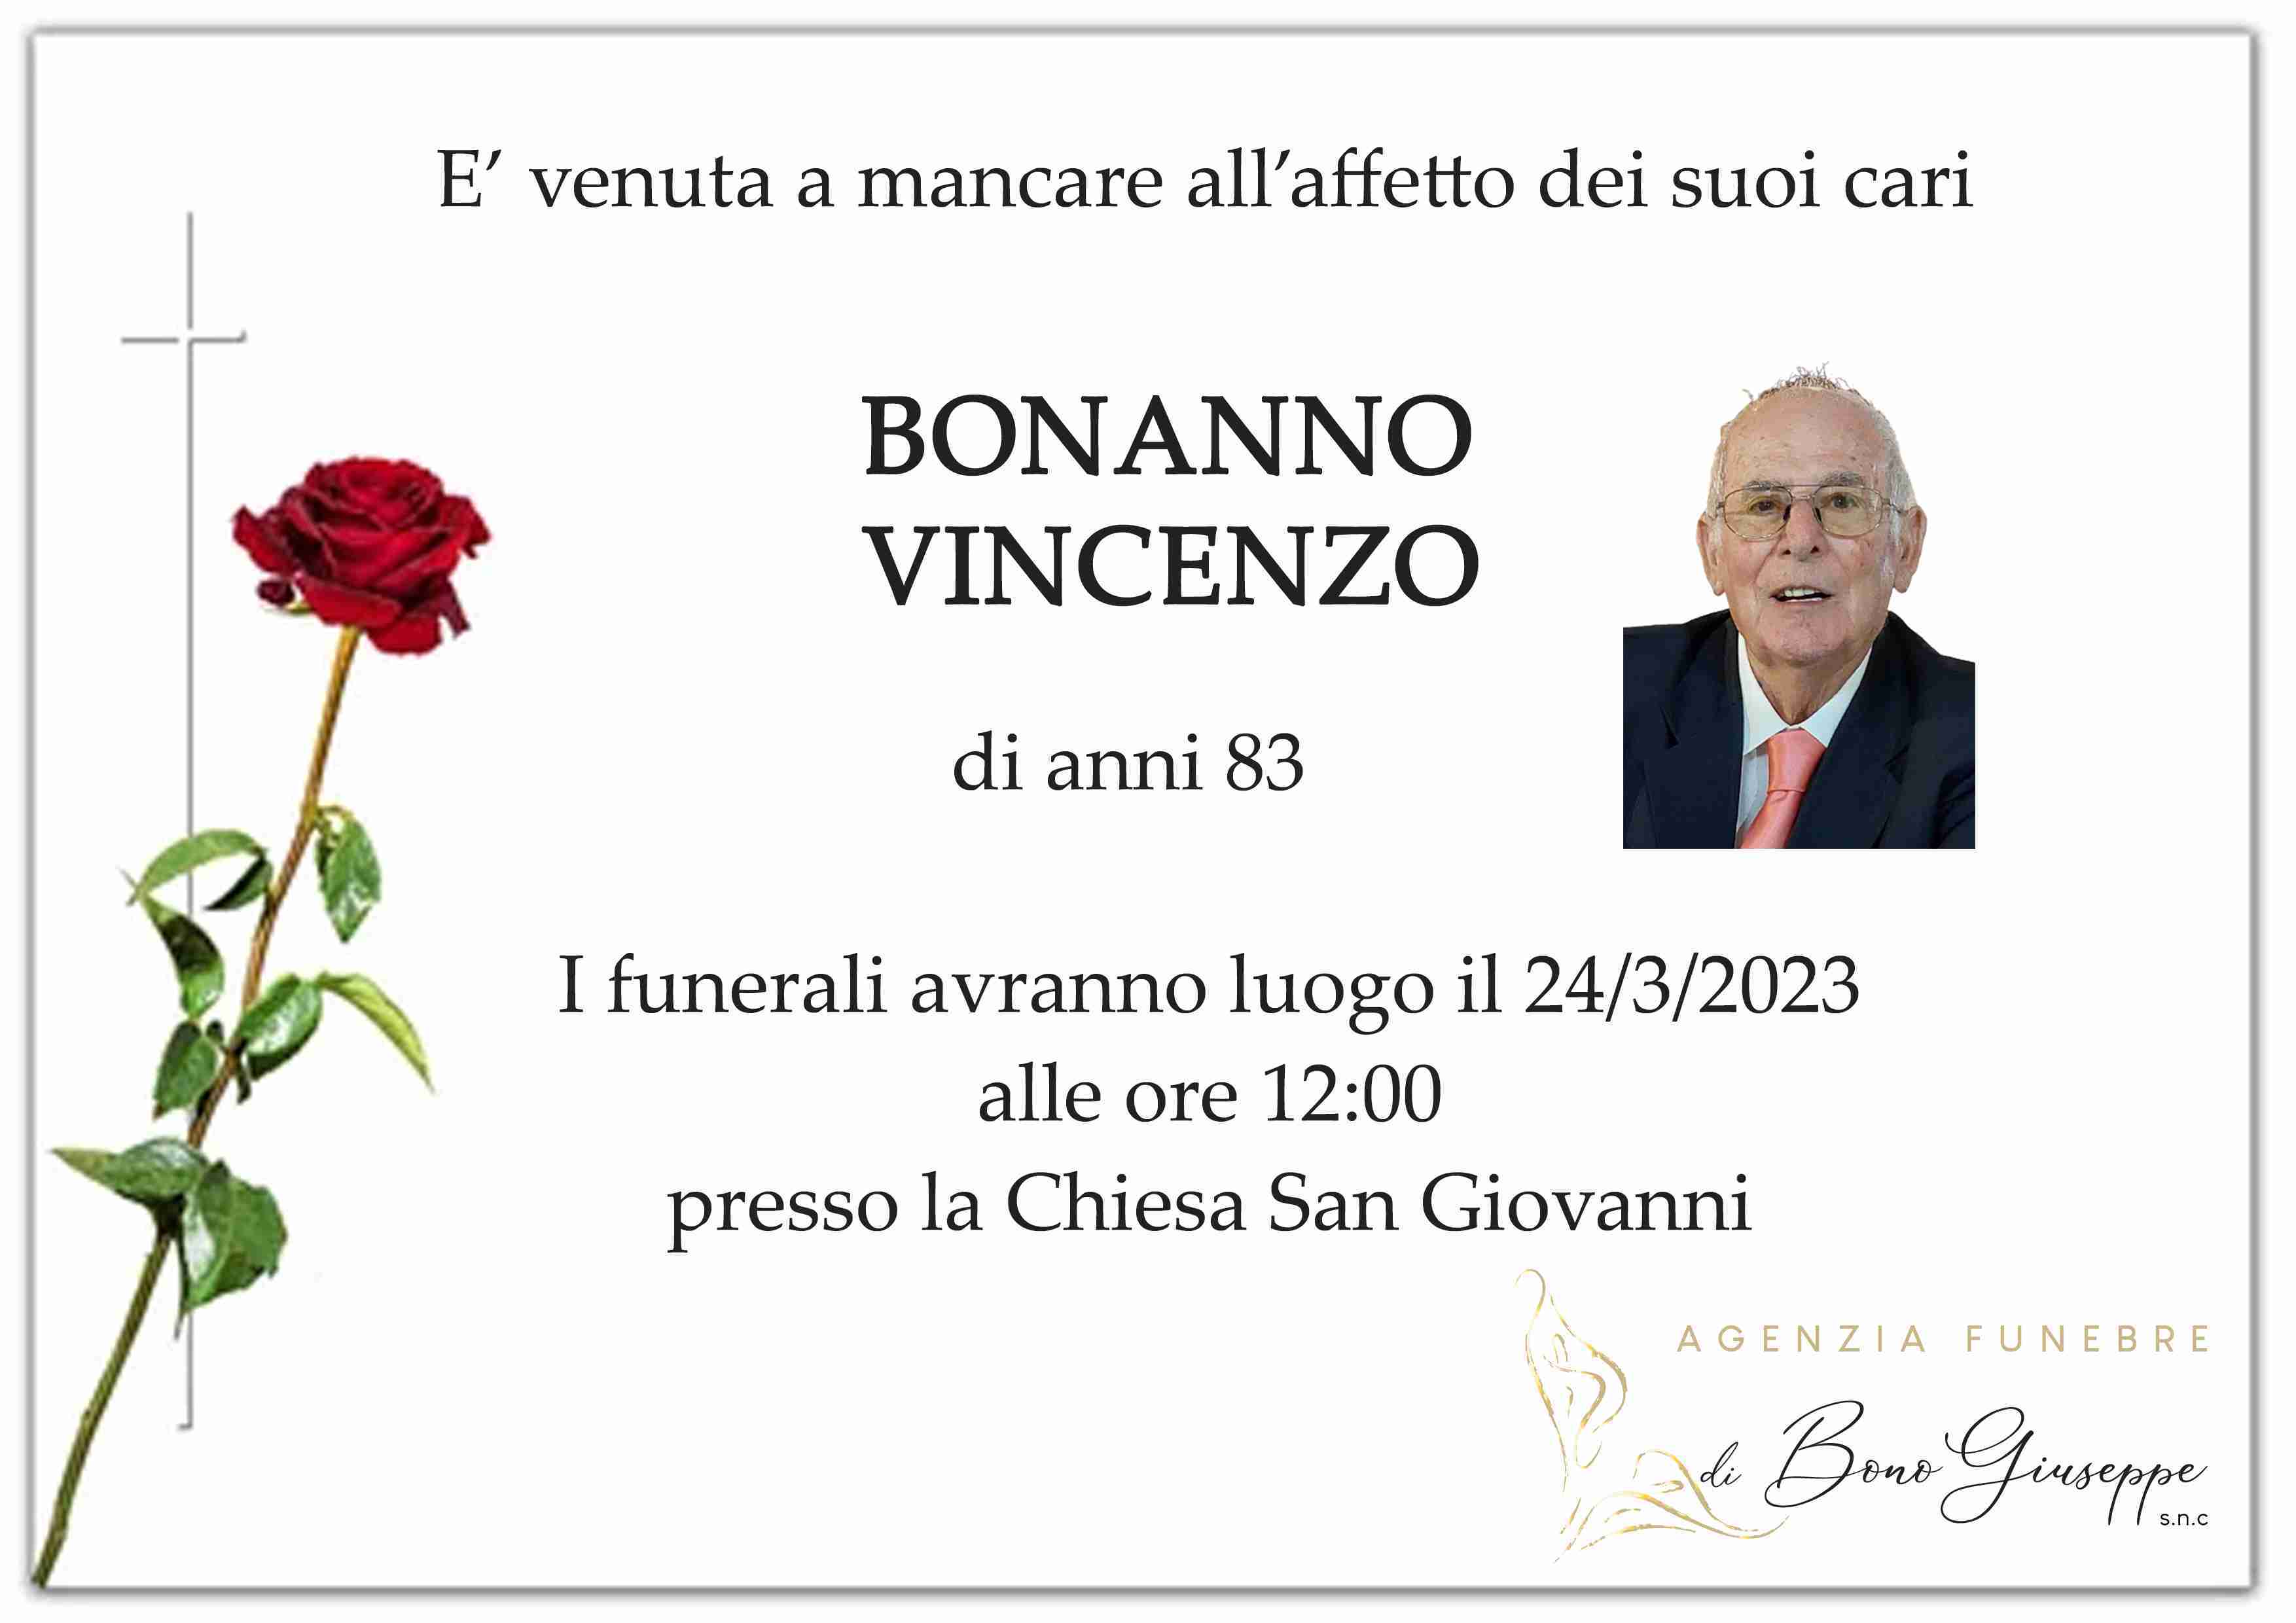 Vincenzo Bonanno